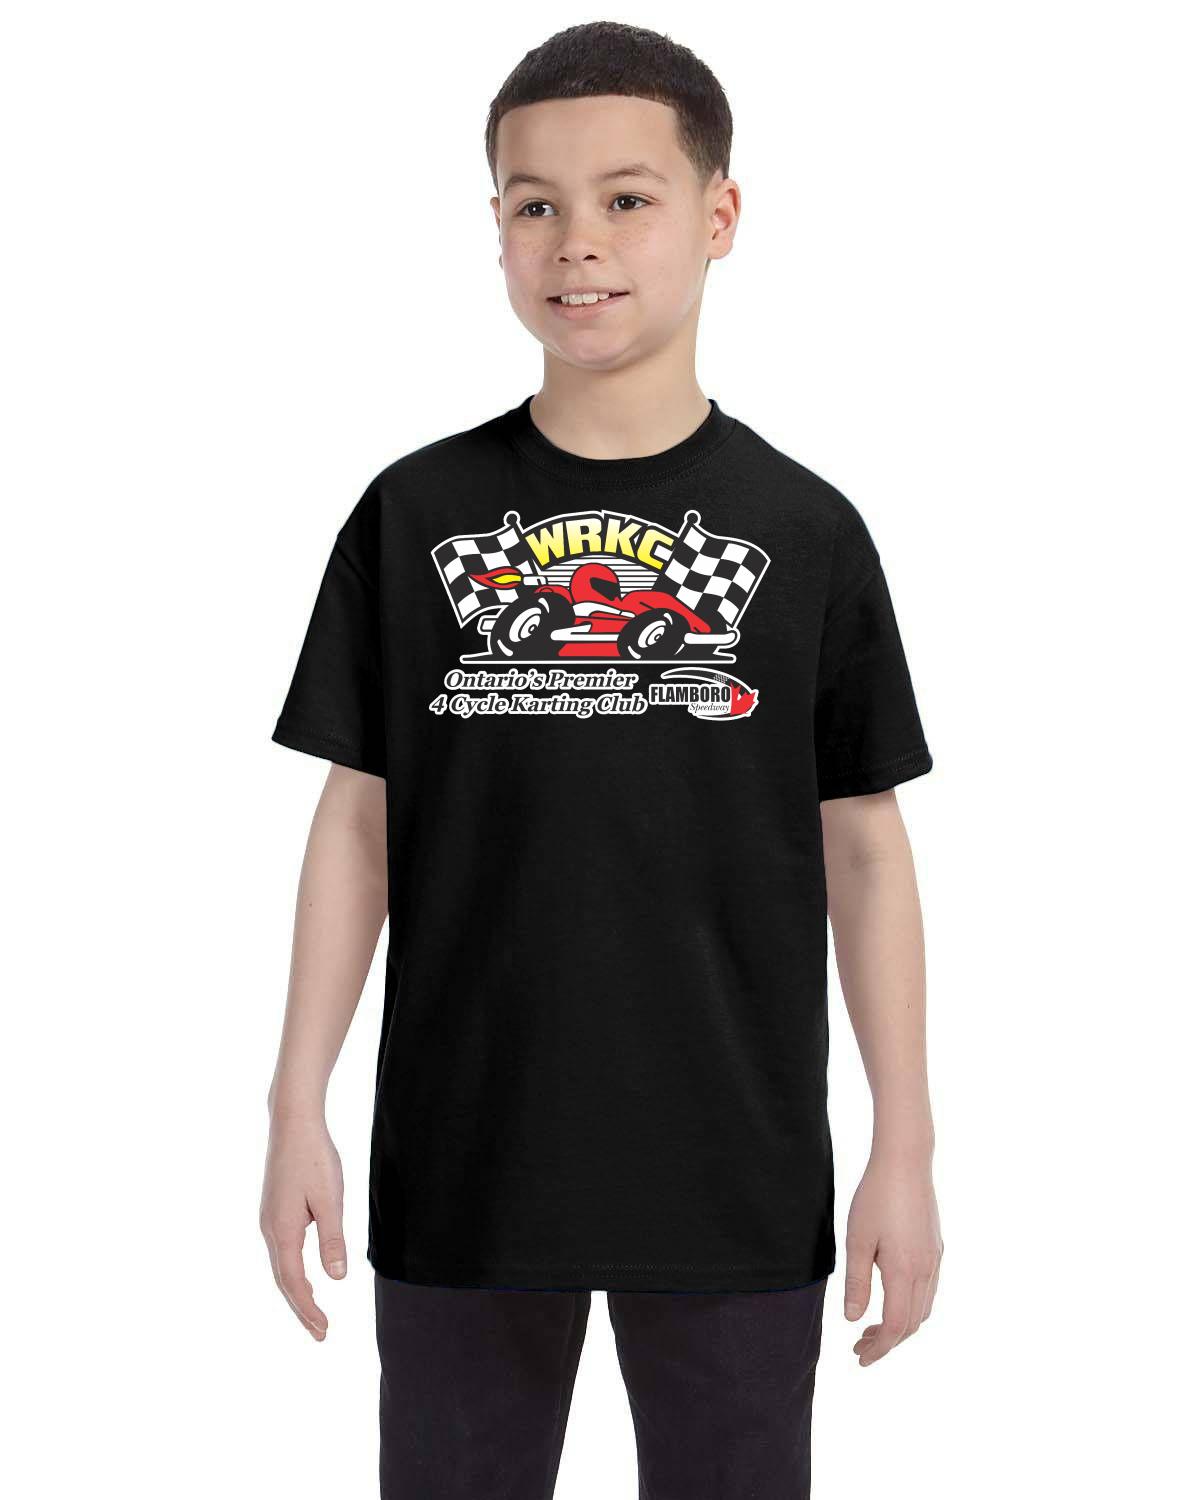 WRKC Kart Club Youth shirt